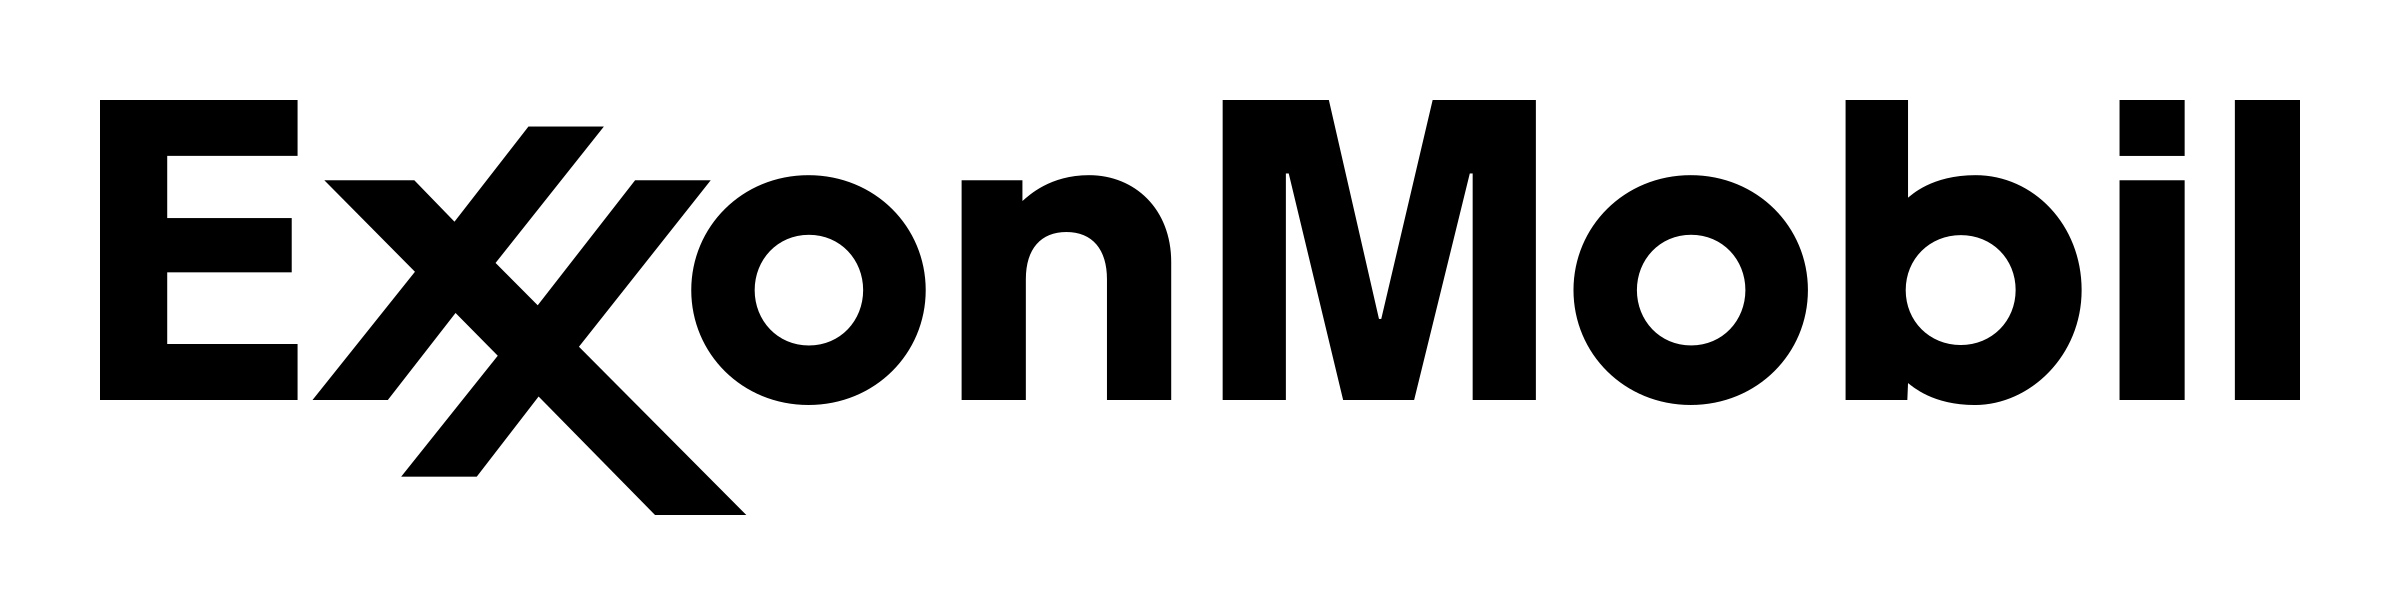 Black and White Mobil Logo - ExxonMobil Logo PNG Transparent & SVG Vector